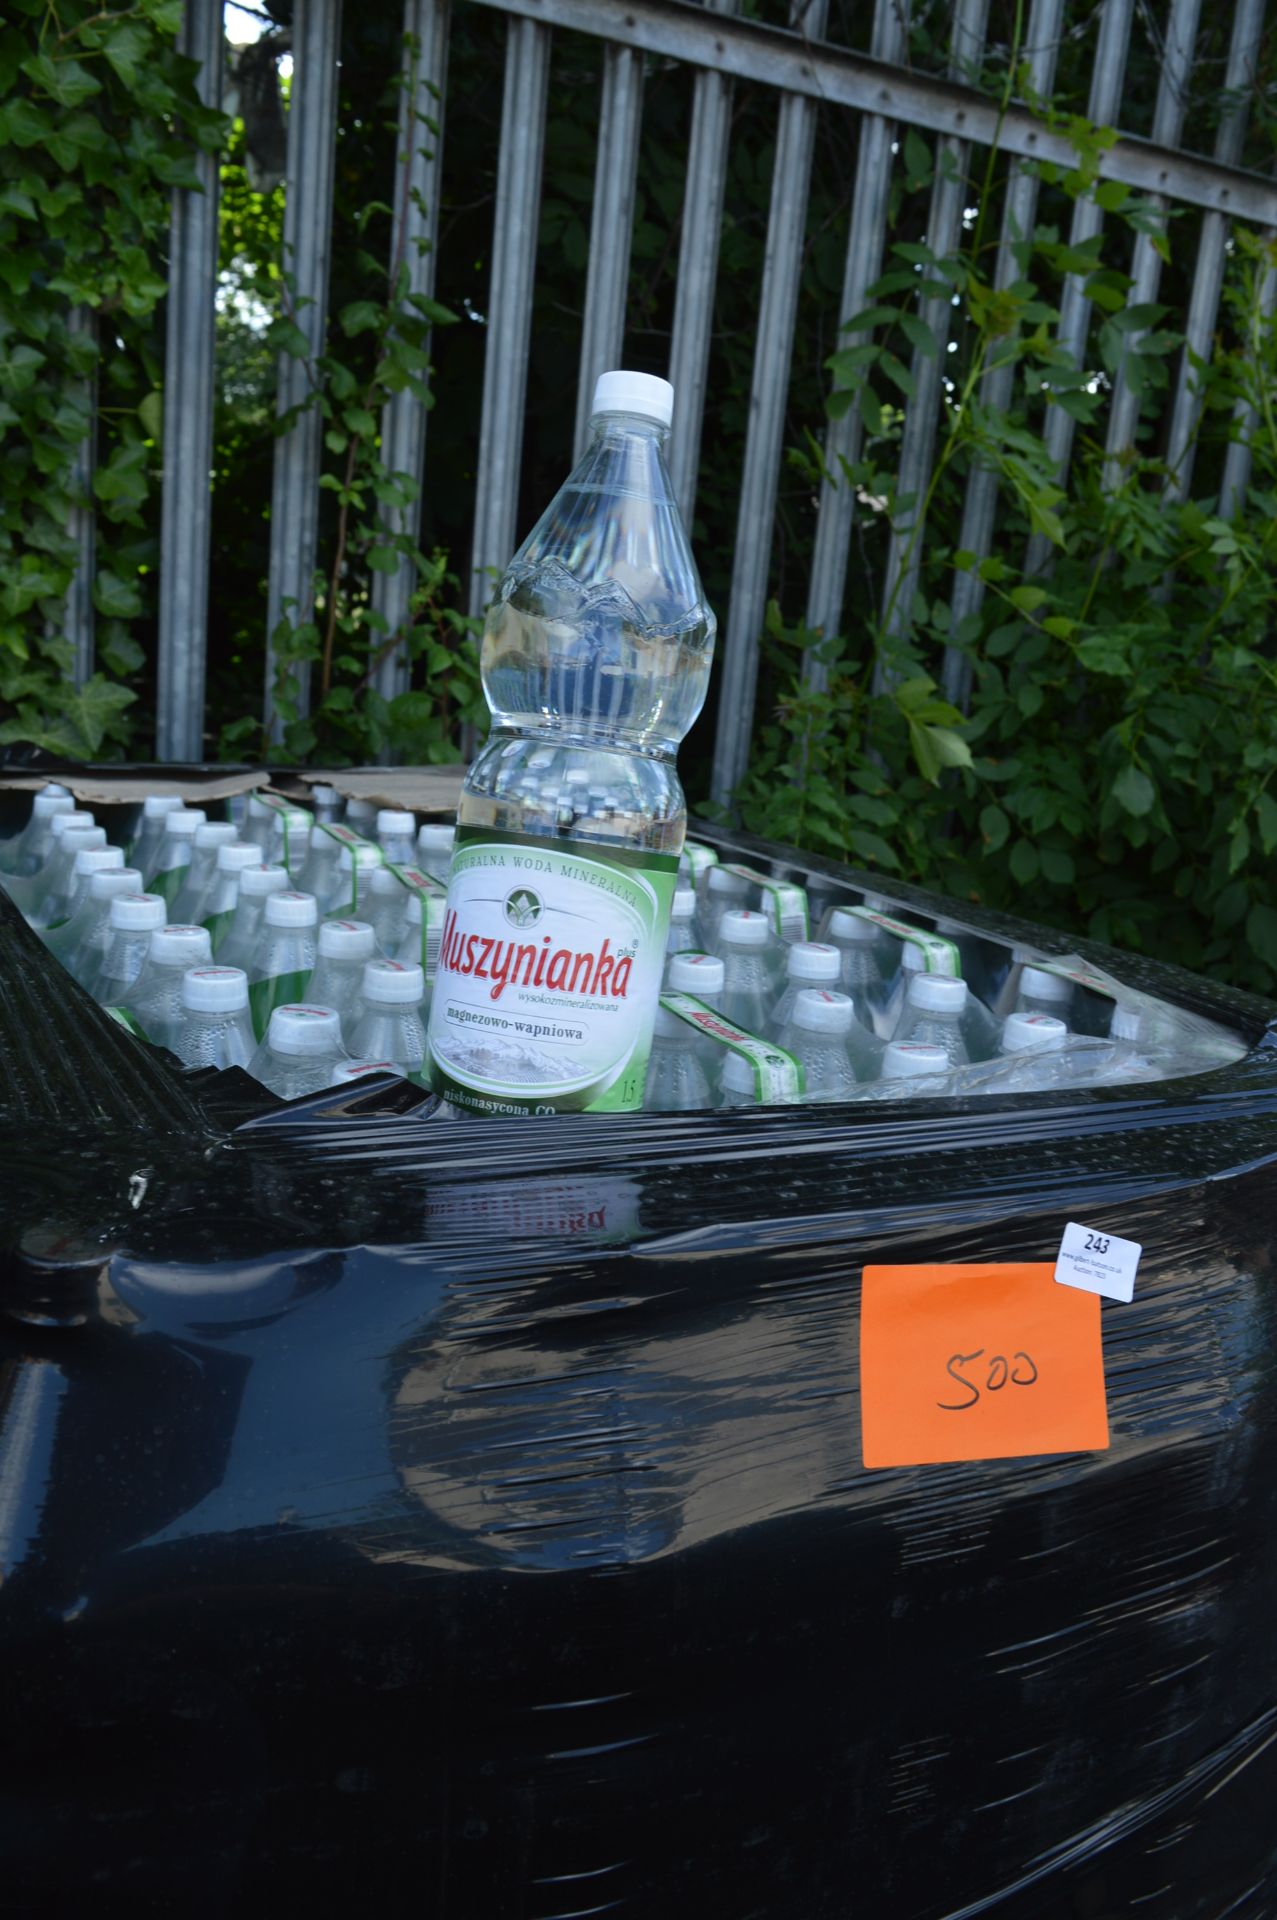 *500 Bottles of Muszynianka 1.5L Sparkling Spring Water